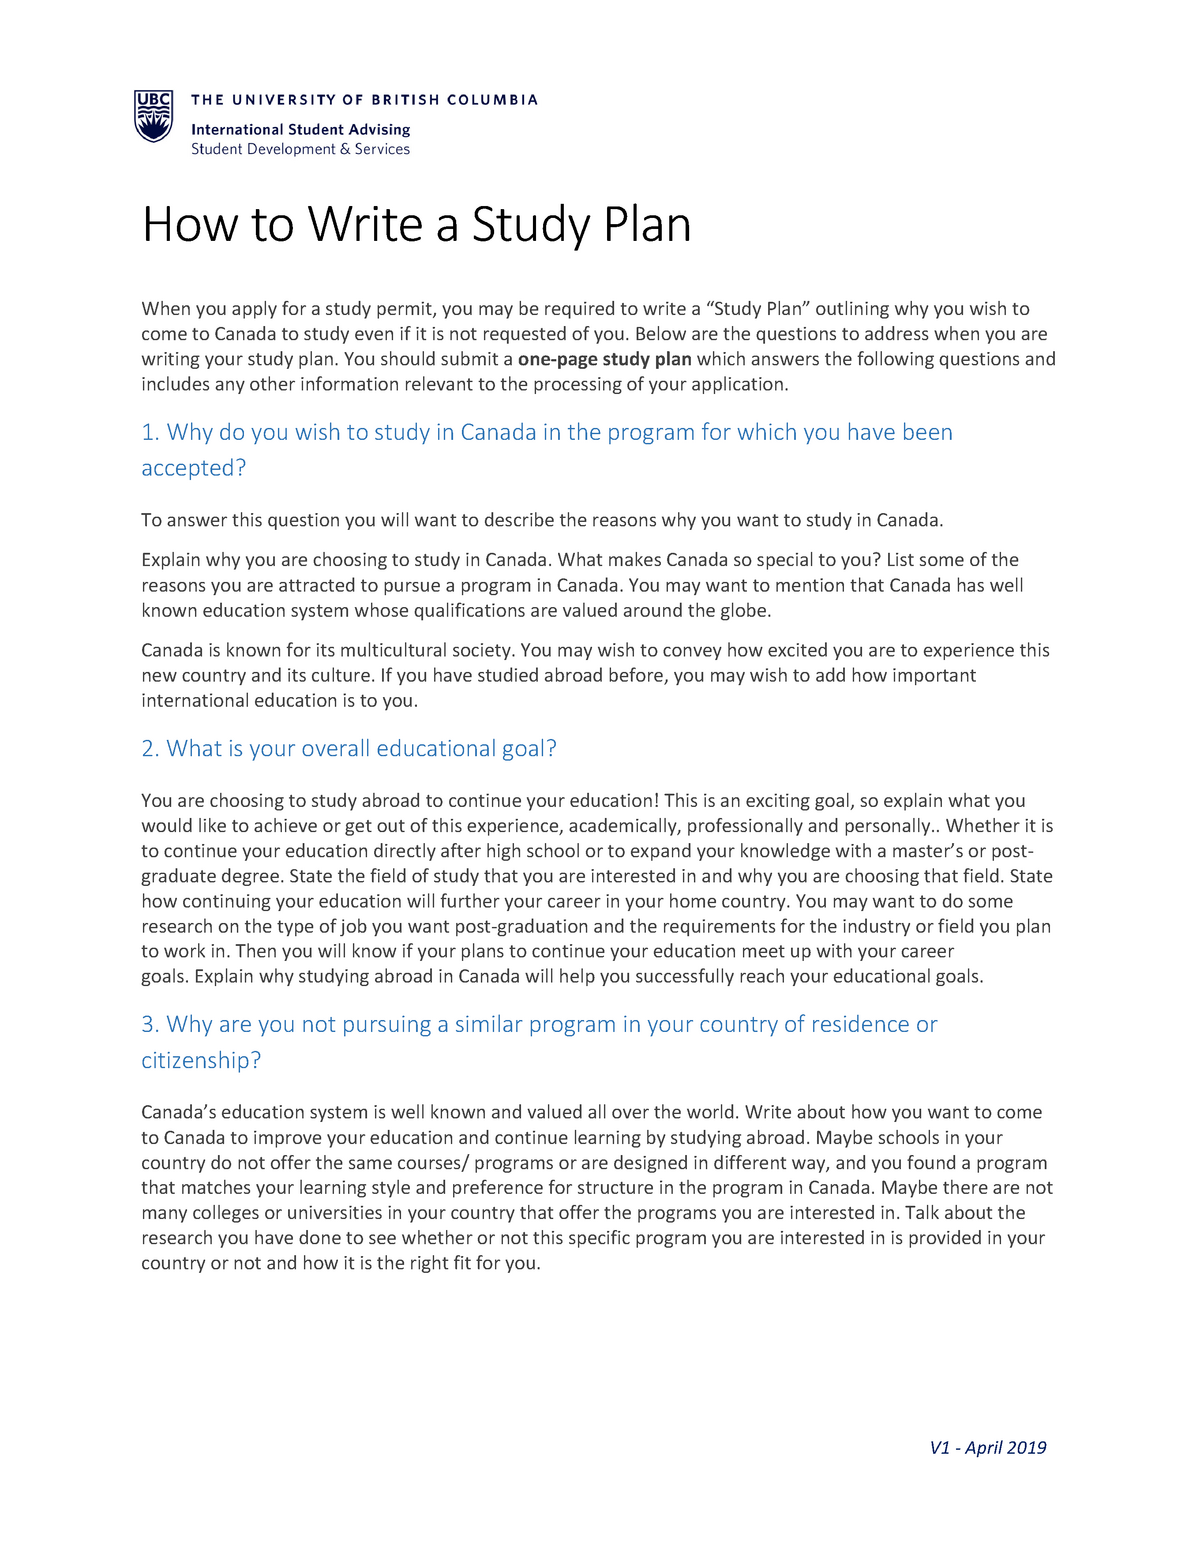 how to write a study plan essay